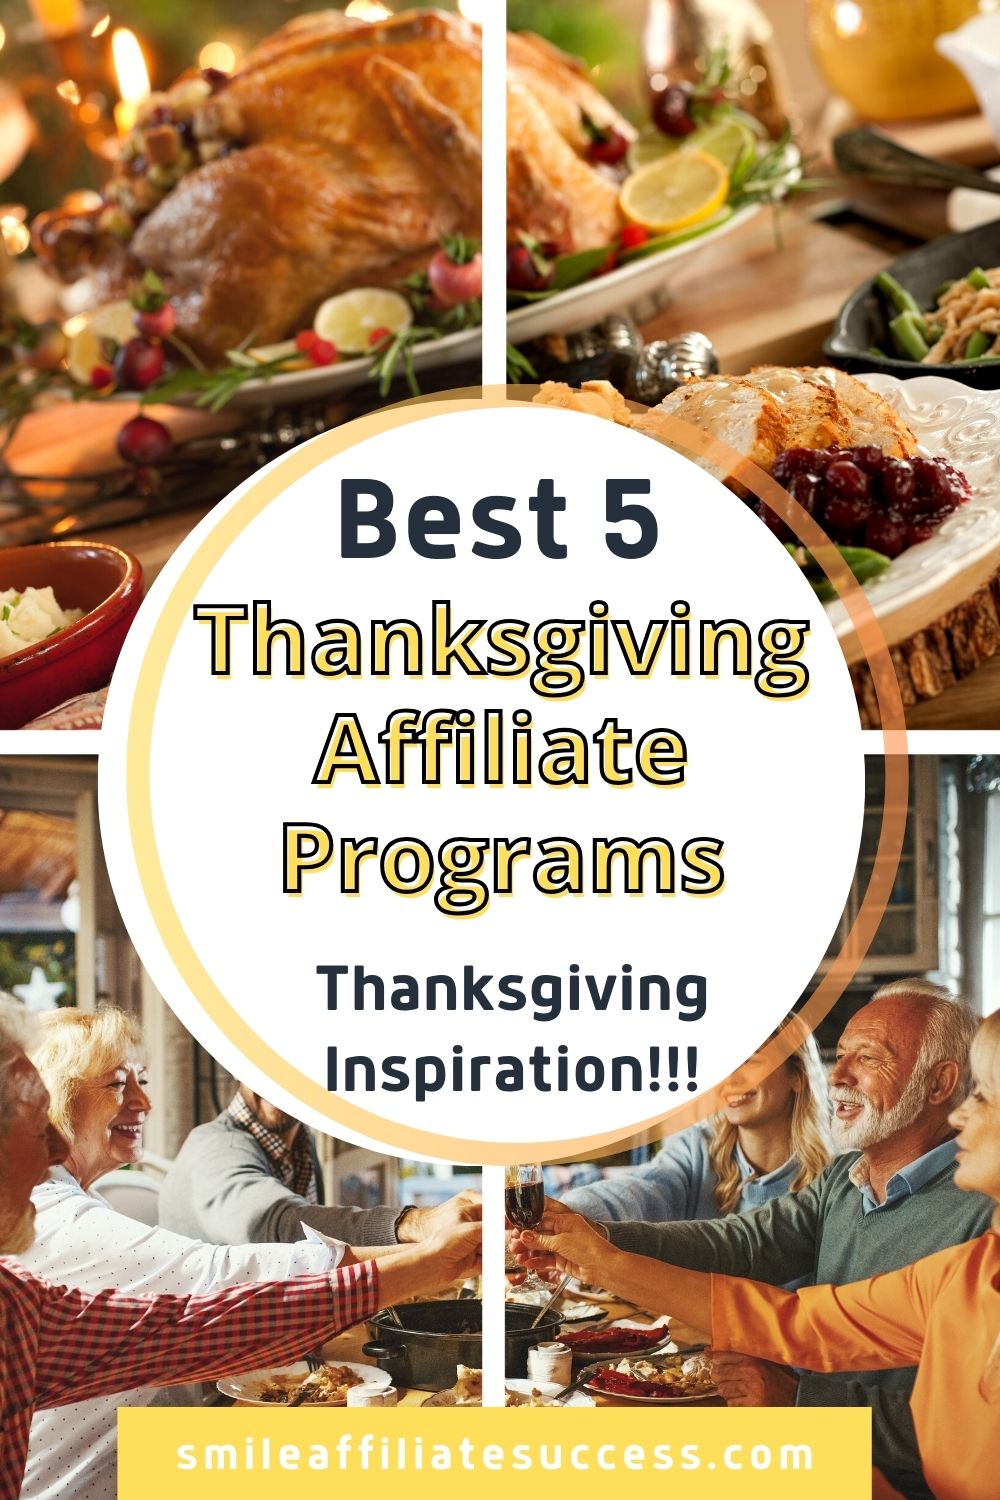 Best 5 Thanksgiving Affiliate Programs